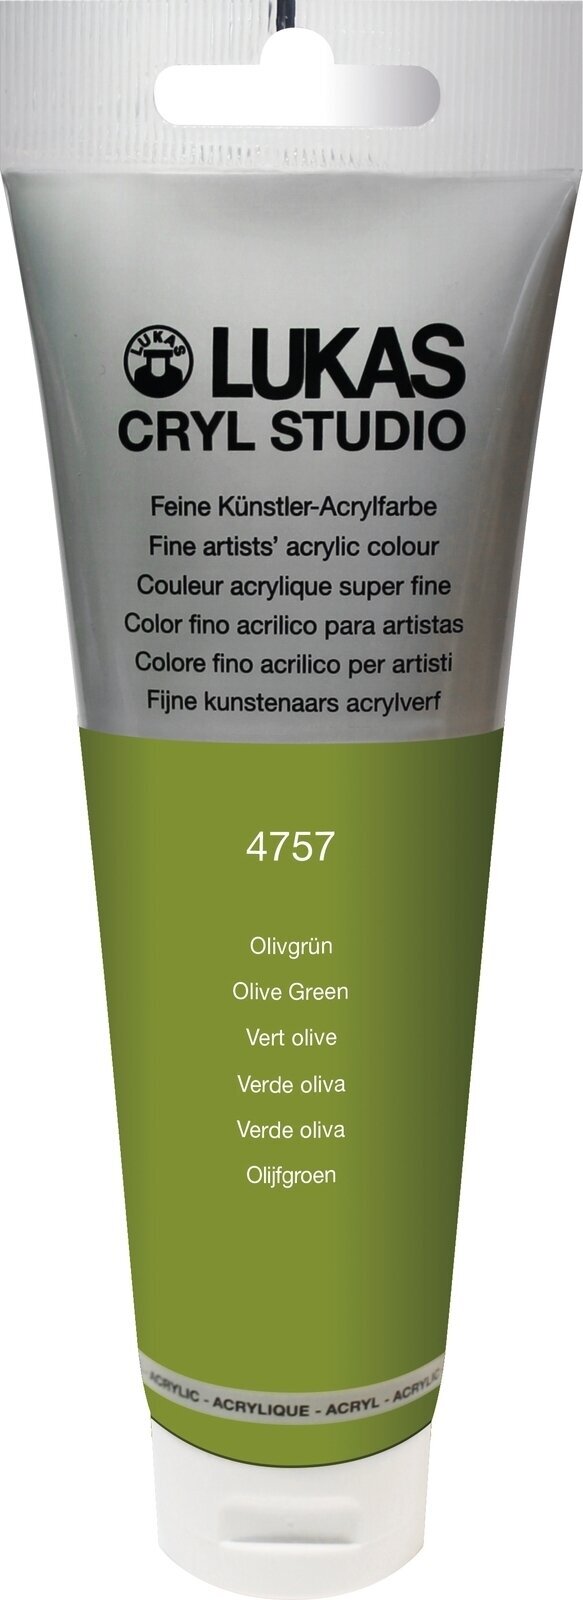 Acrylfarbe Lukas Cryl Studio Acrylfarbe 125 ml Olive Green